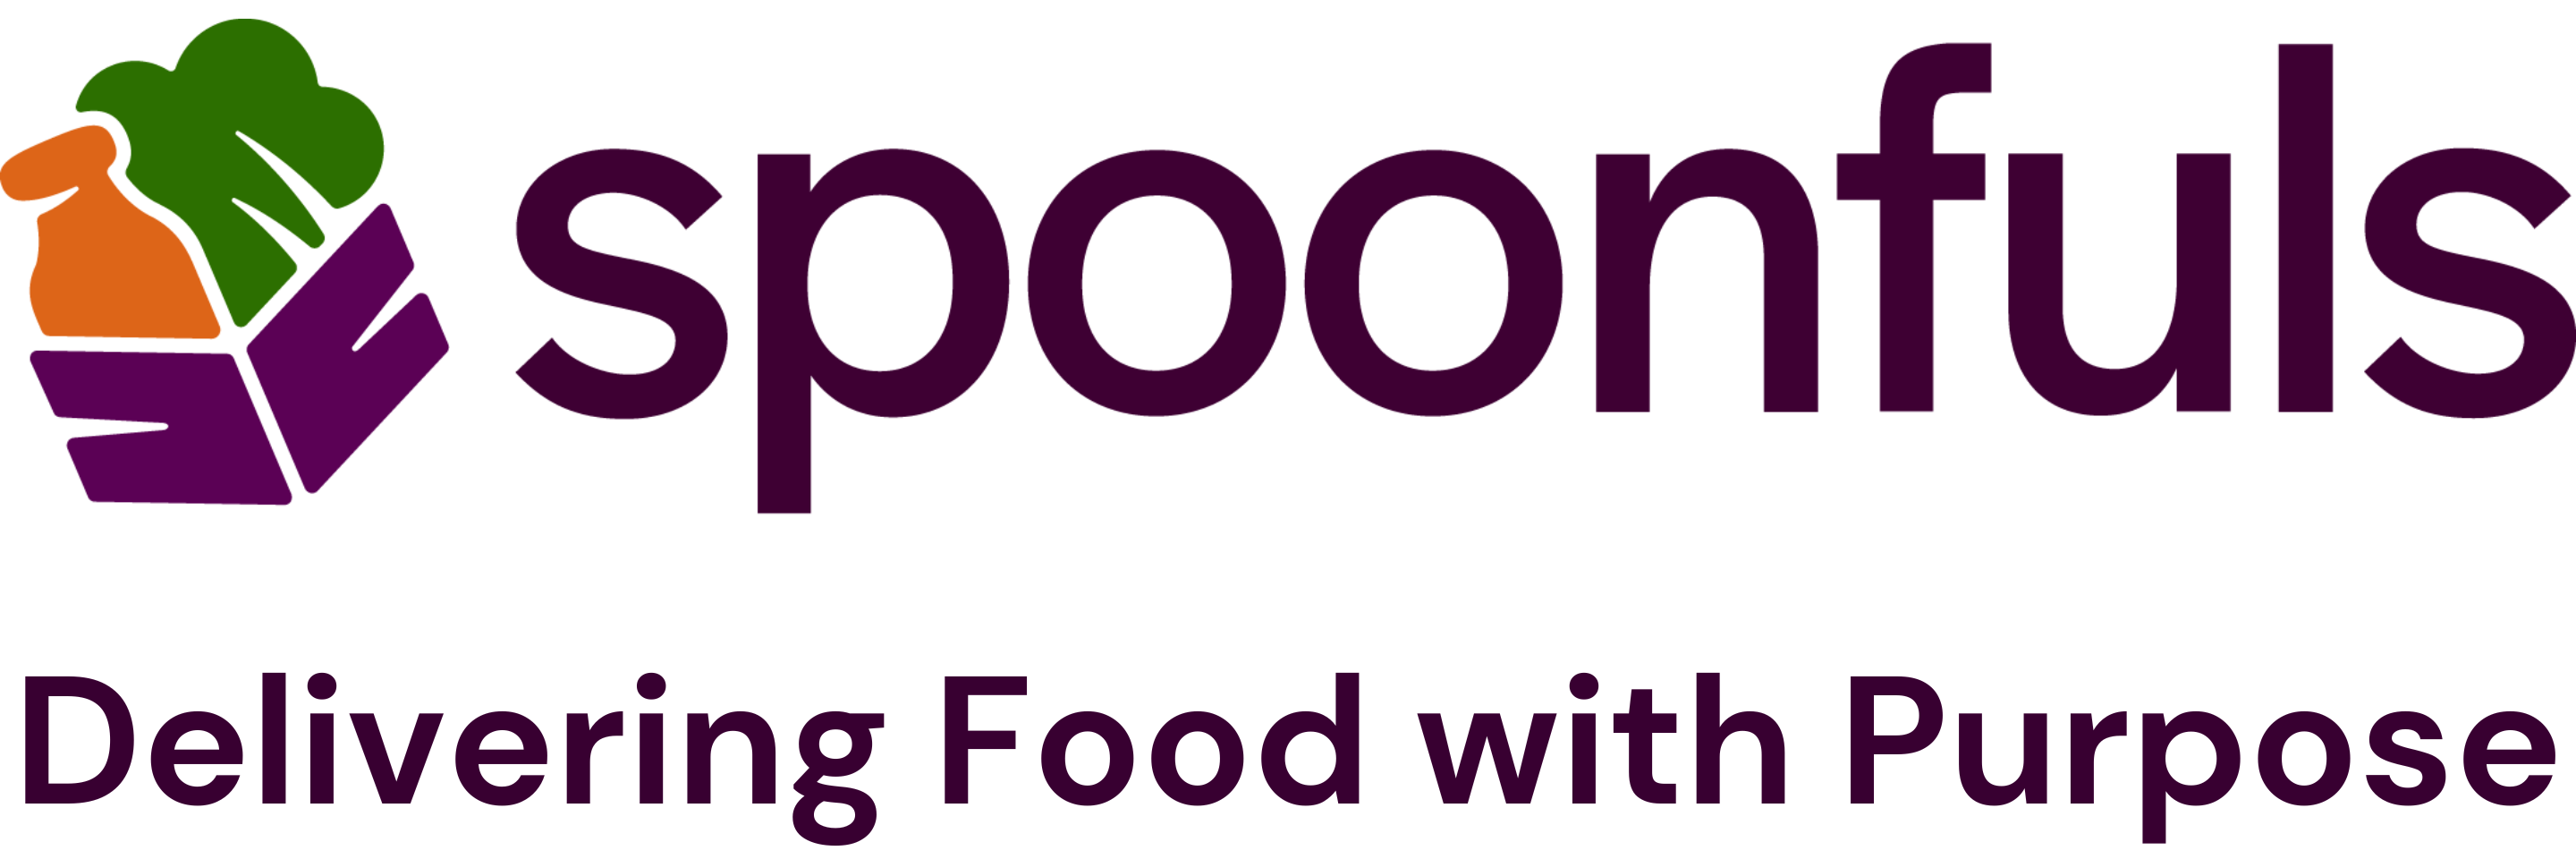 Lovin' Spoonfuls logo